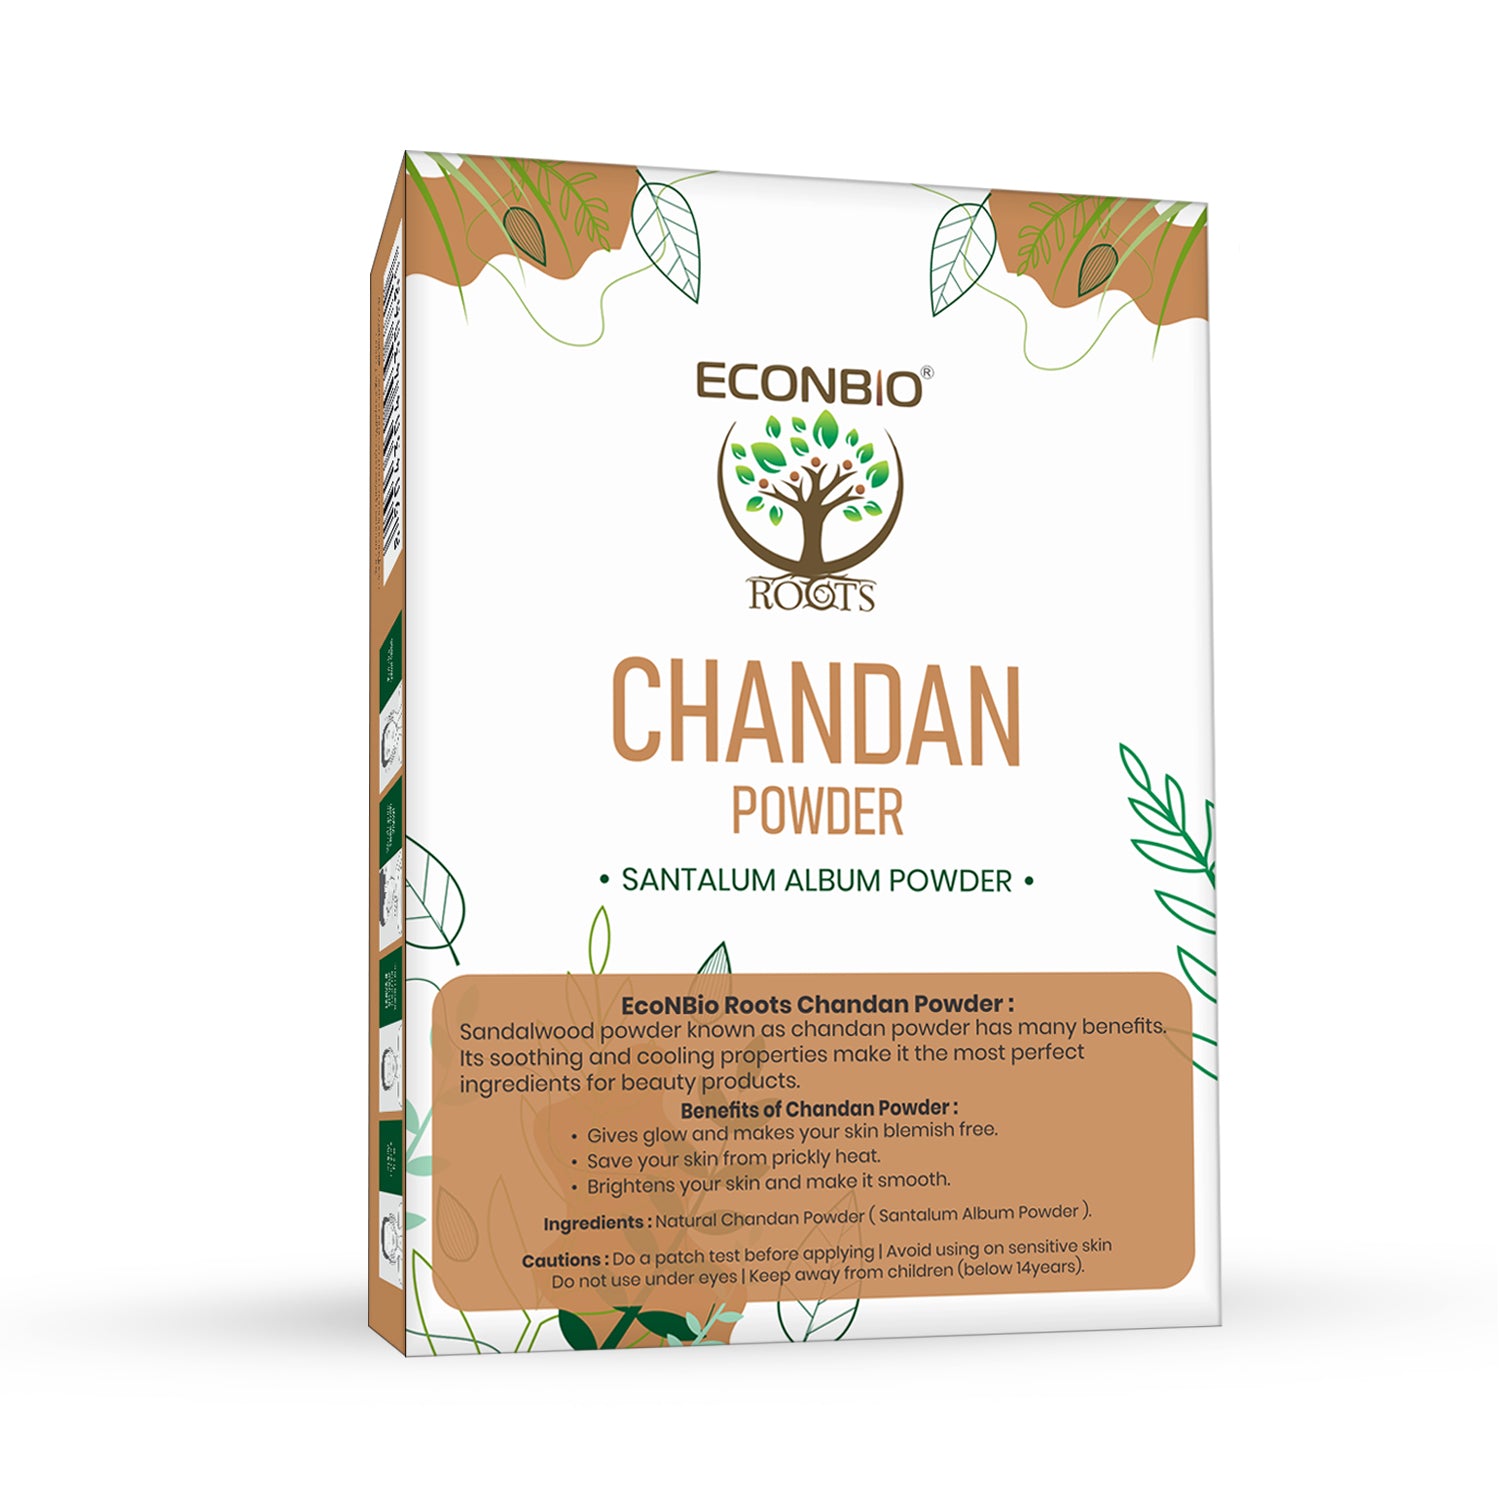 ECONBIO ROOTS 100% Natural Chandan Powder 50g (Pack of 2)